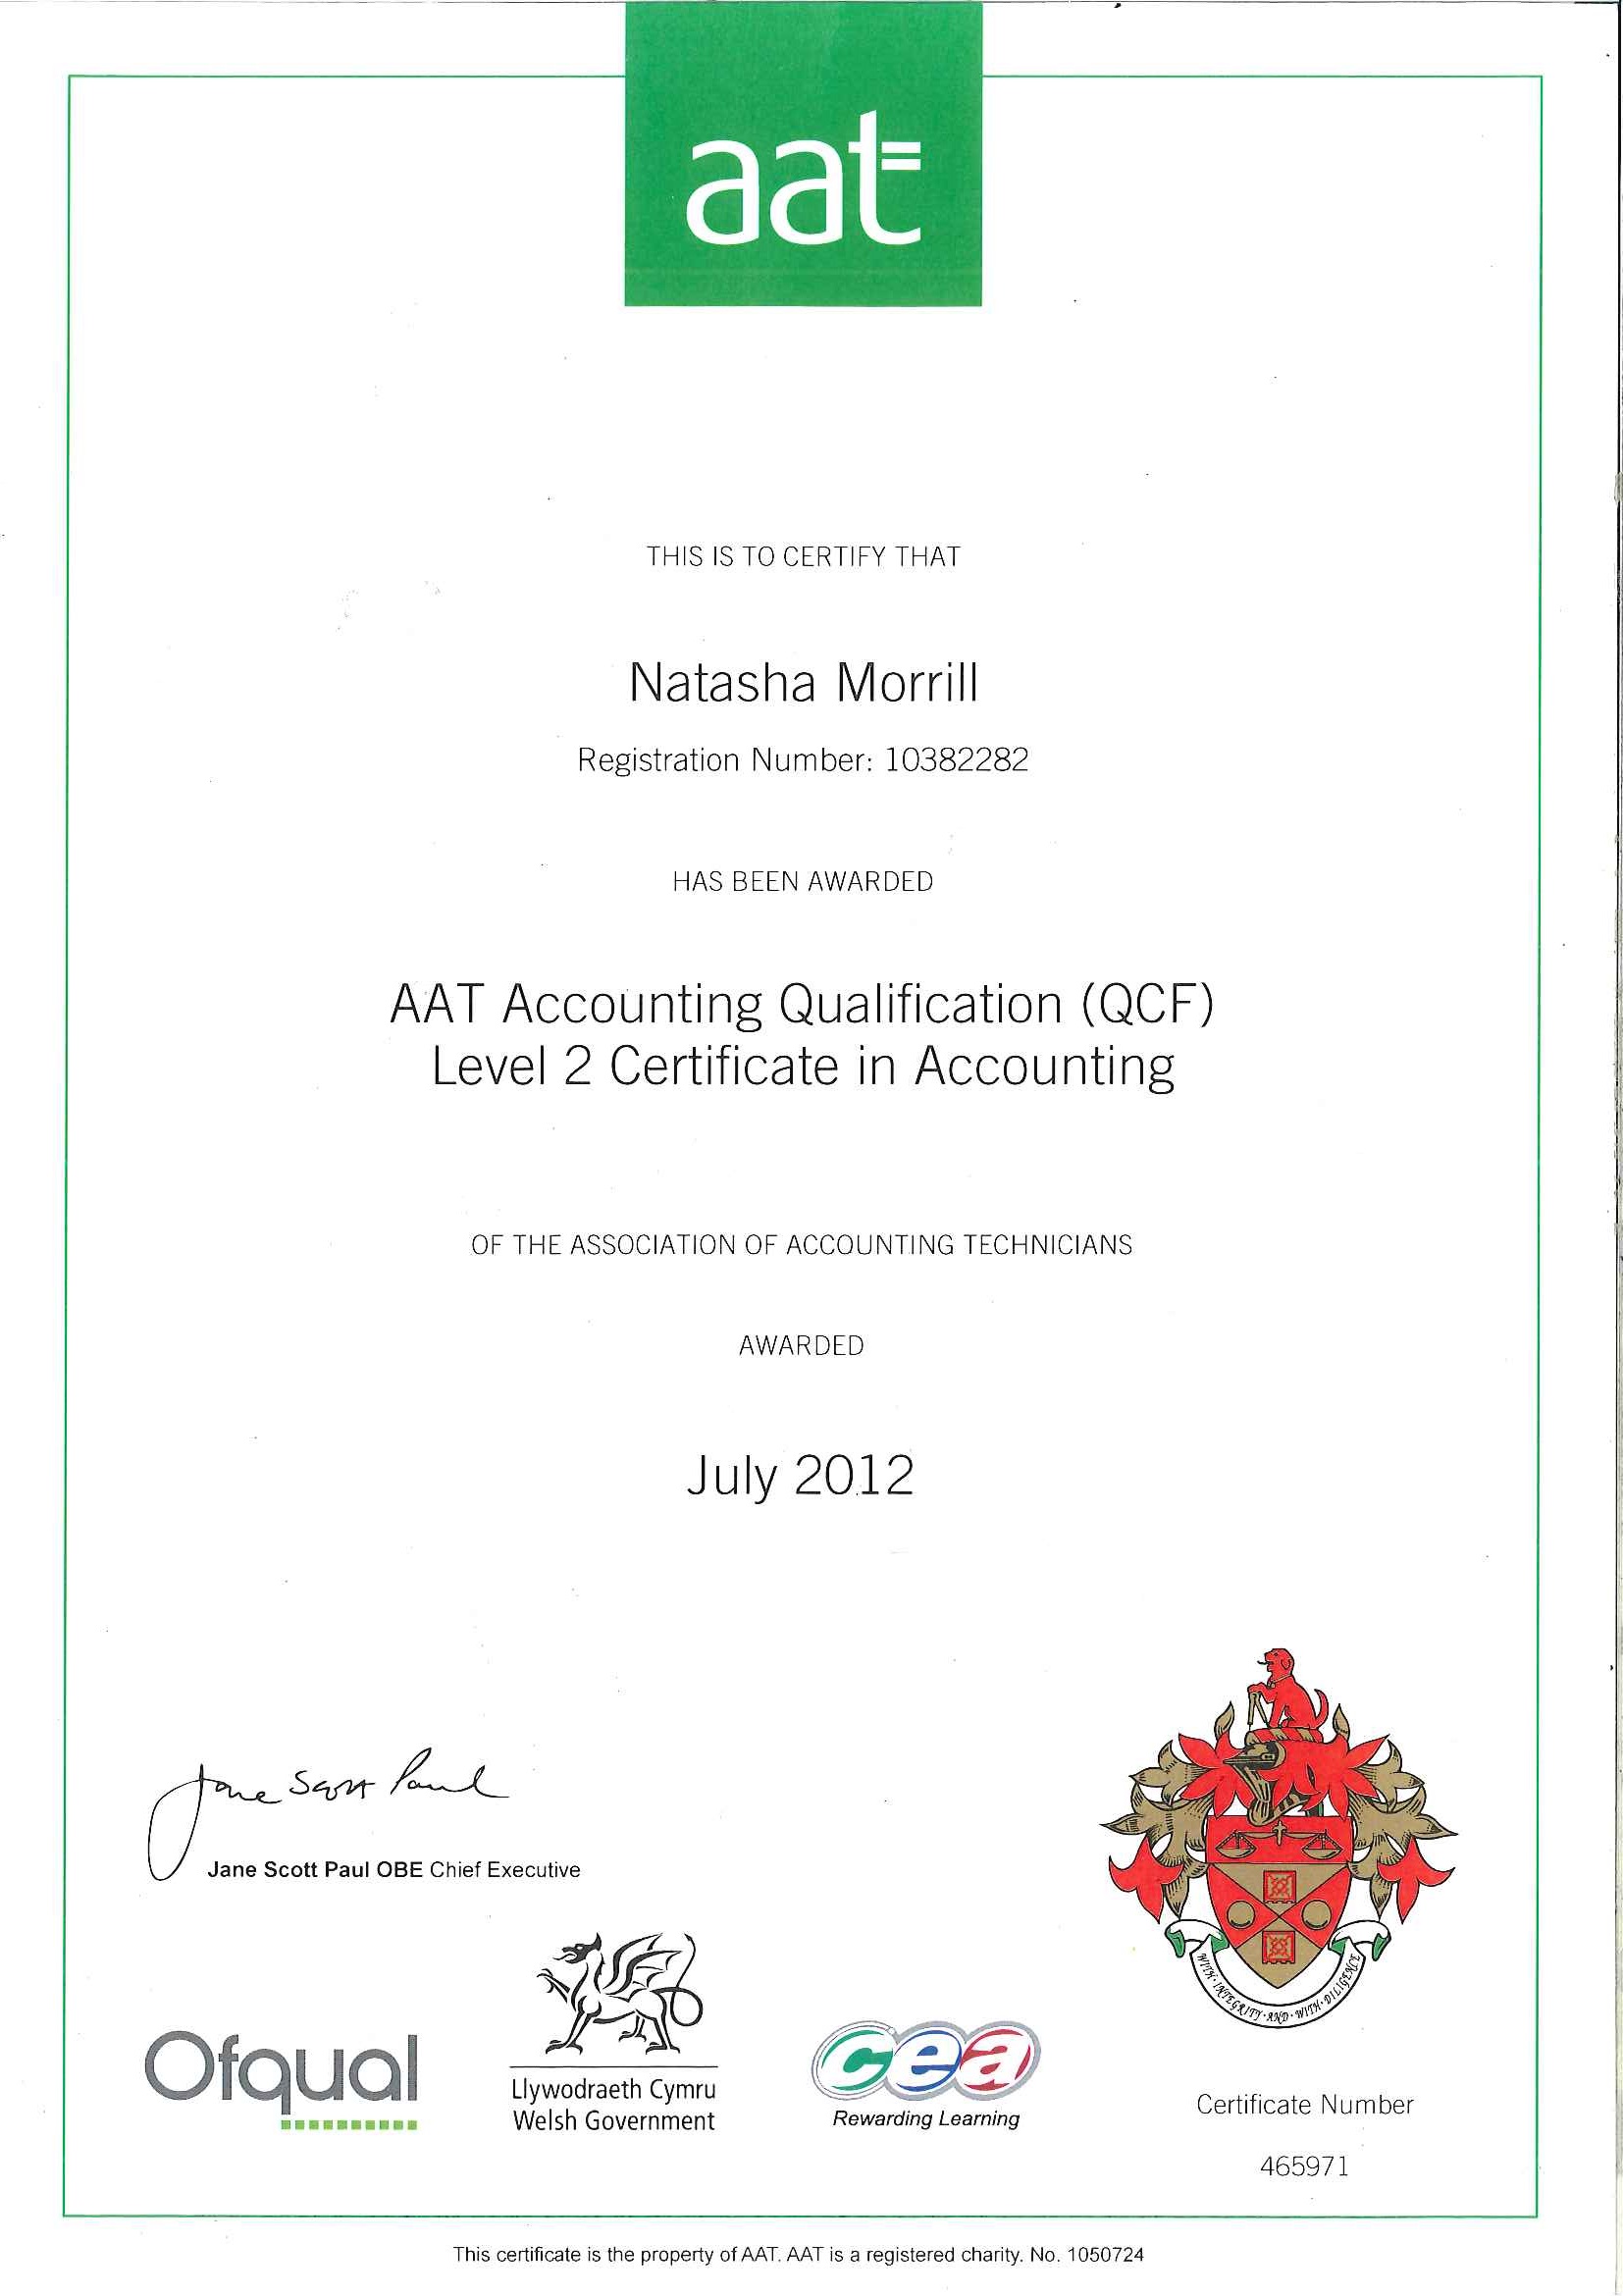 Natasha's AAT Level 2 Certificate.